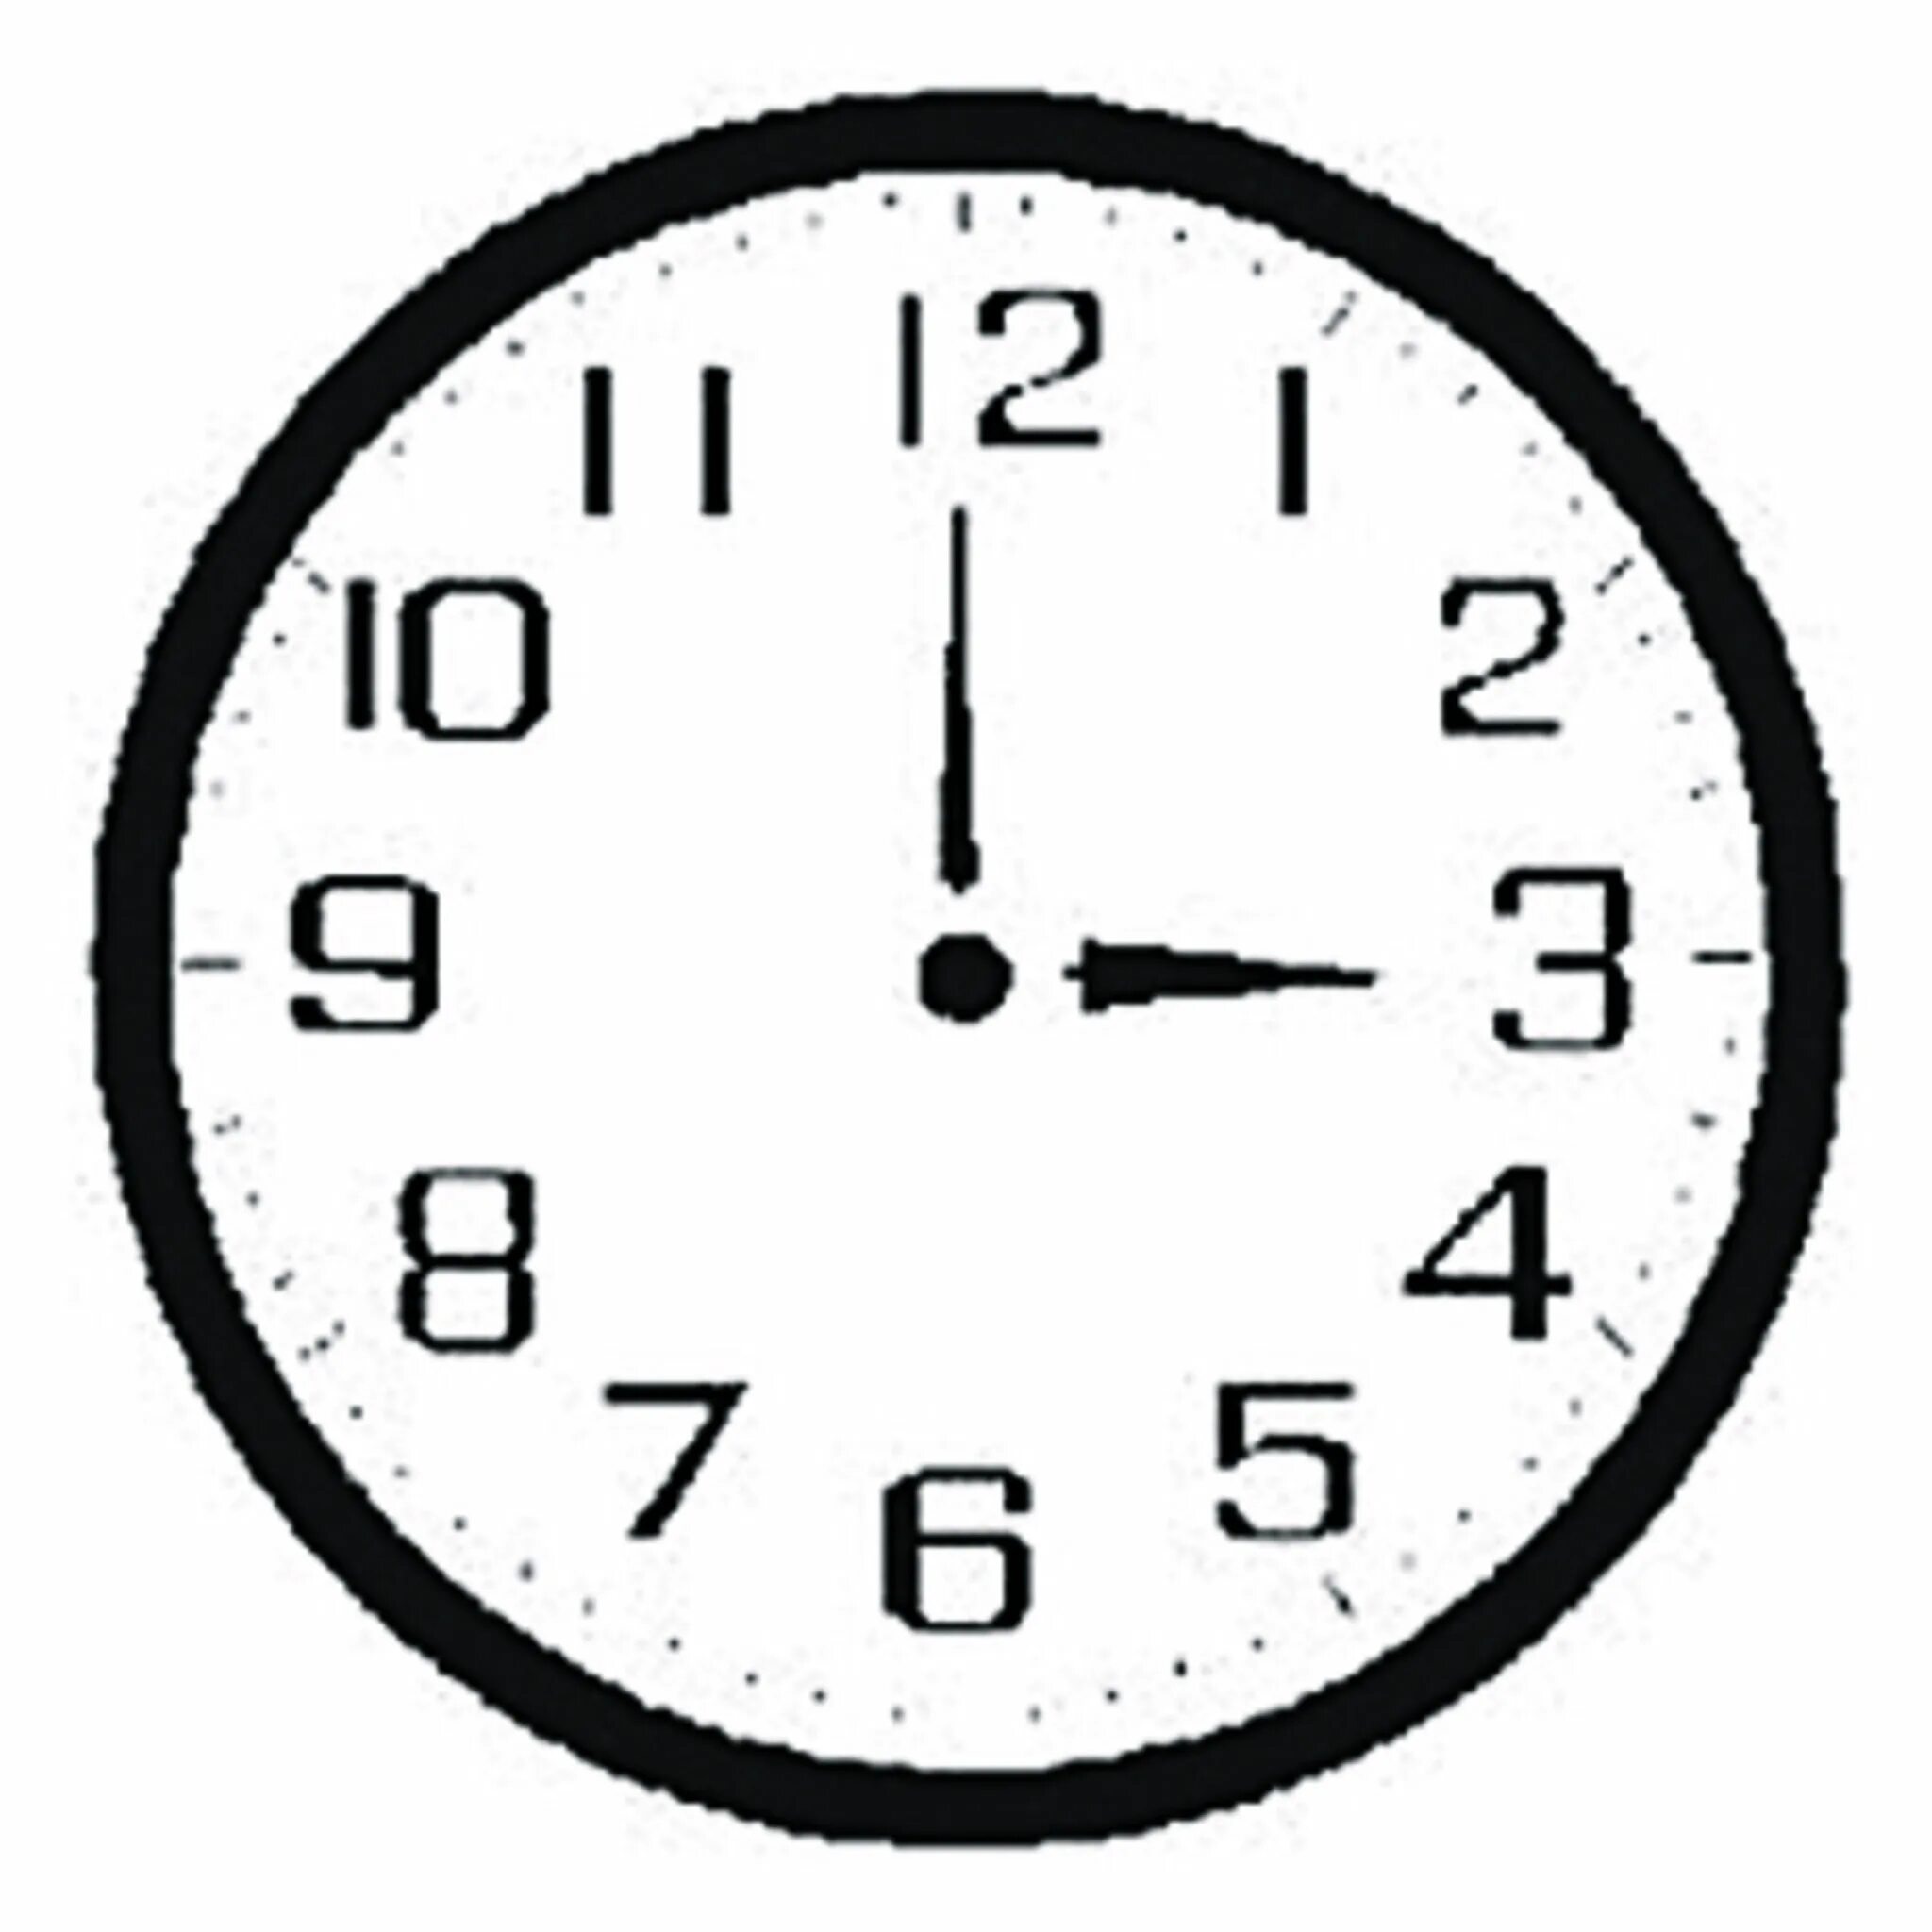 12 15 время. Три часа на циферблате. Часы со стрелками. Изображение часов со стрелками. Часы три часа.